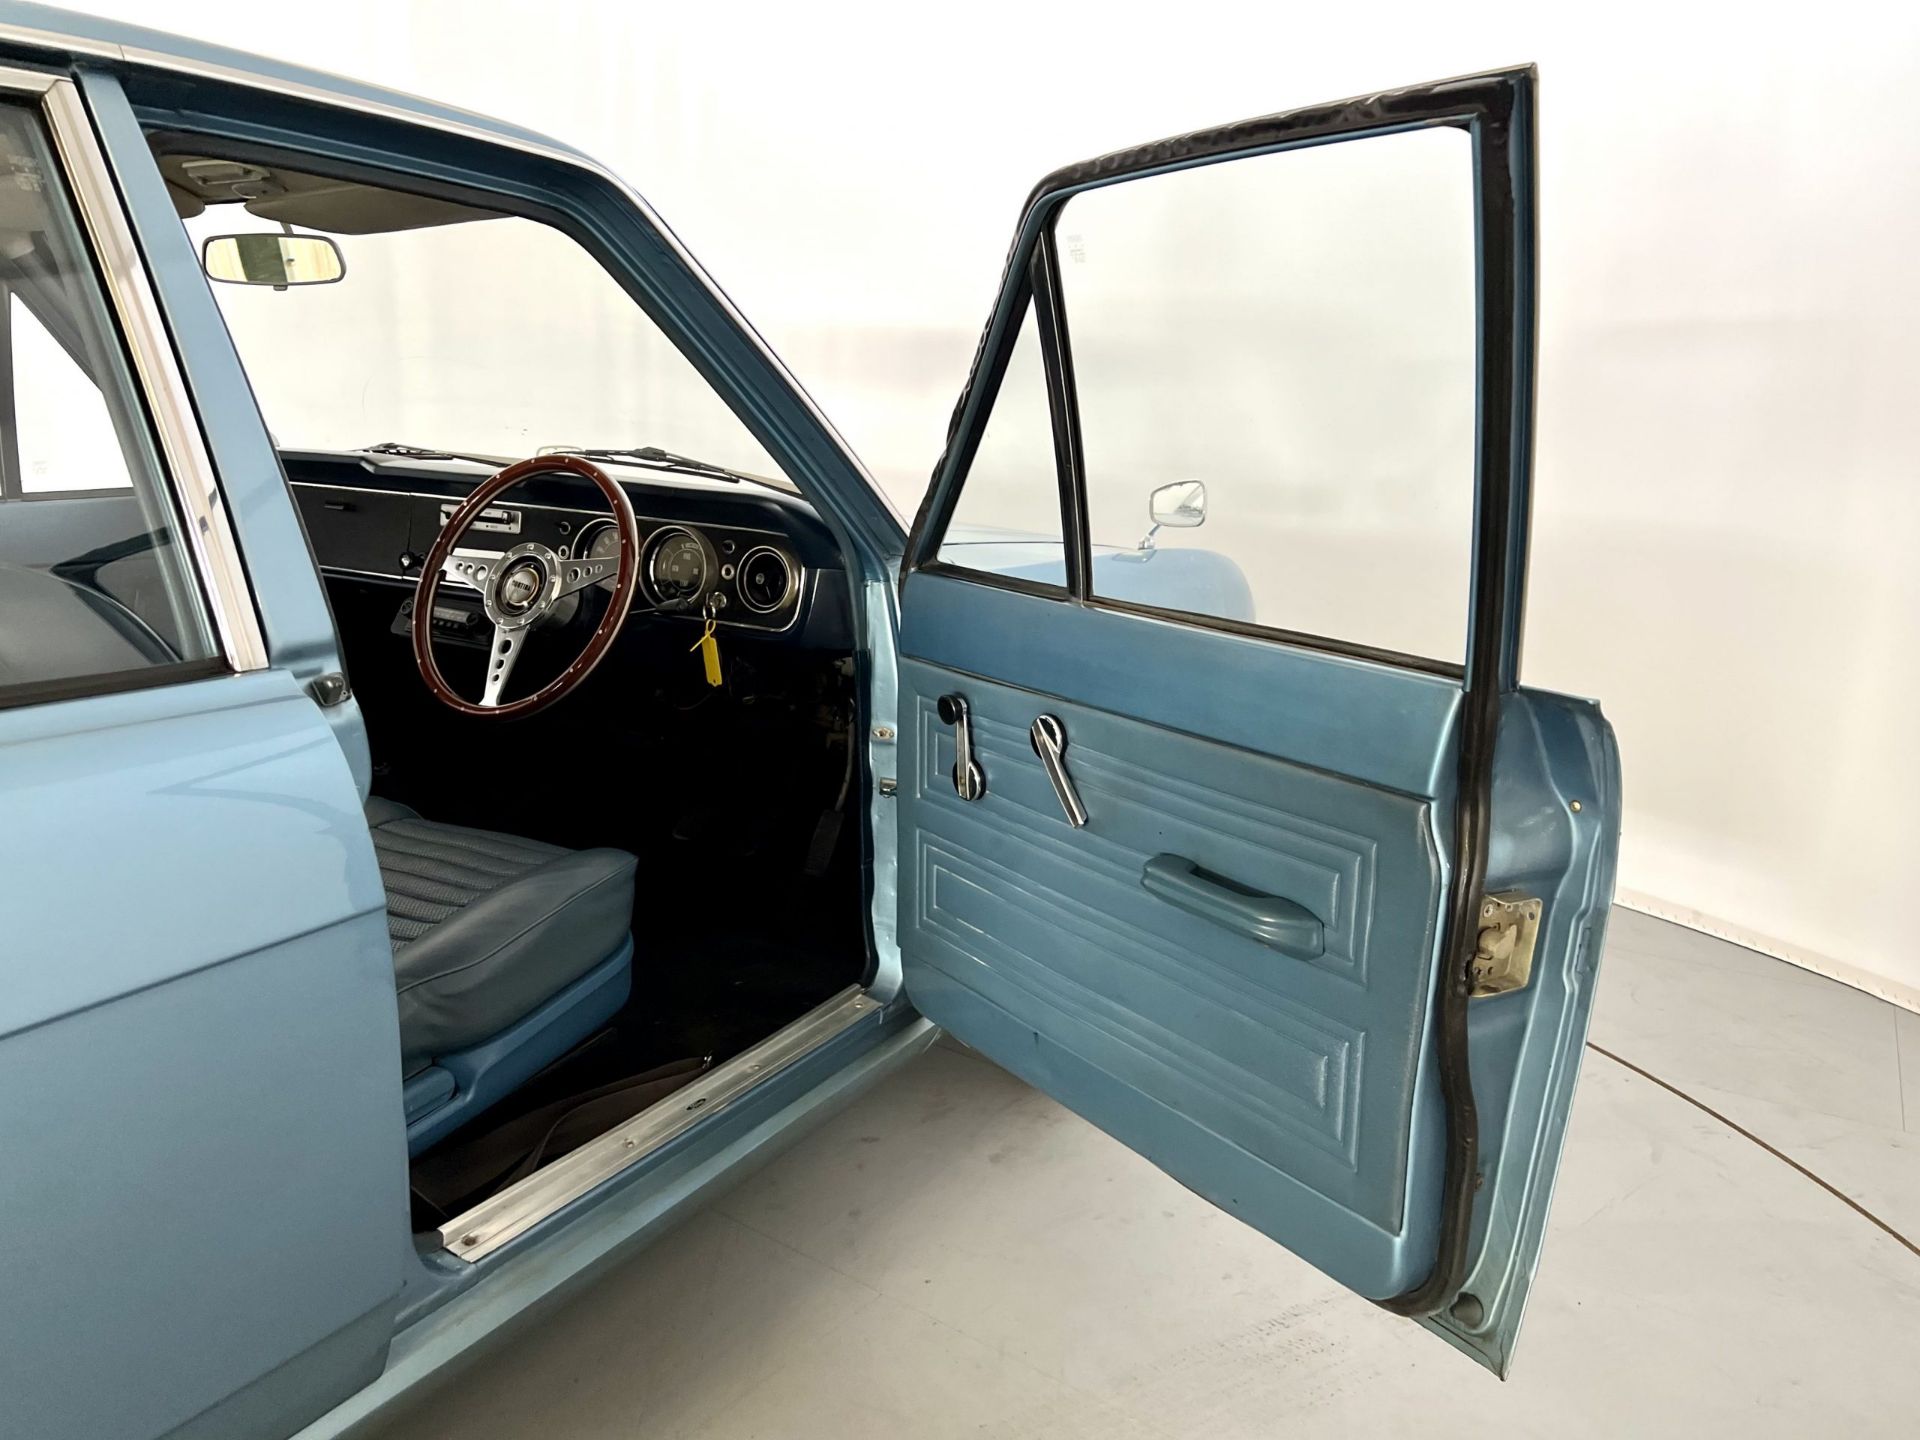 Ford Cortina 1600 Super - Image 20 of 43